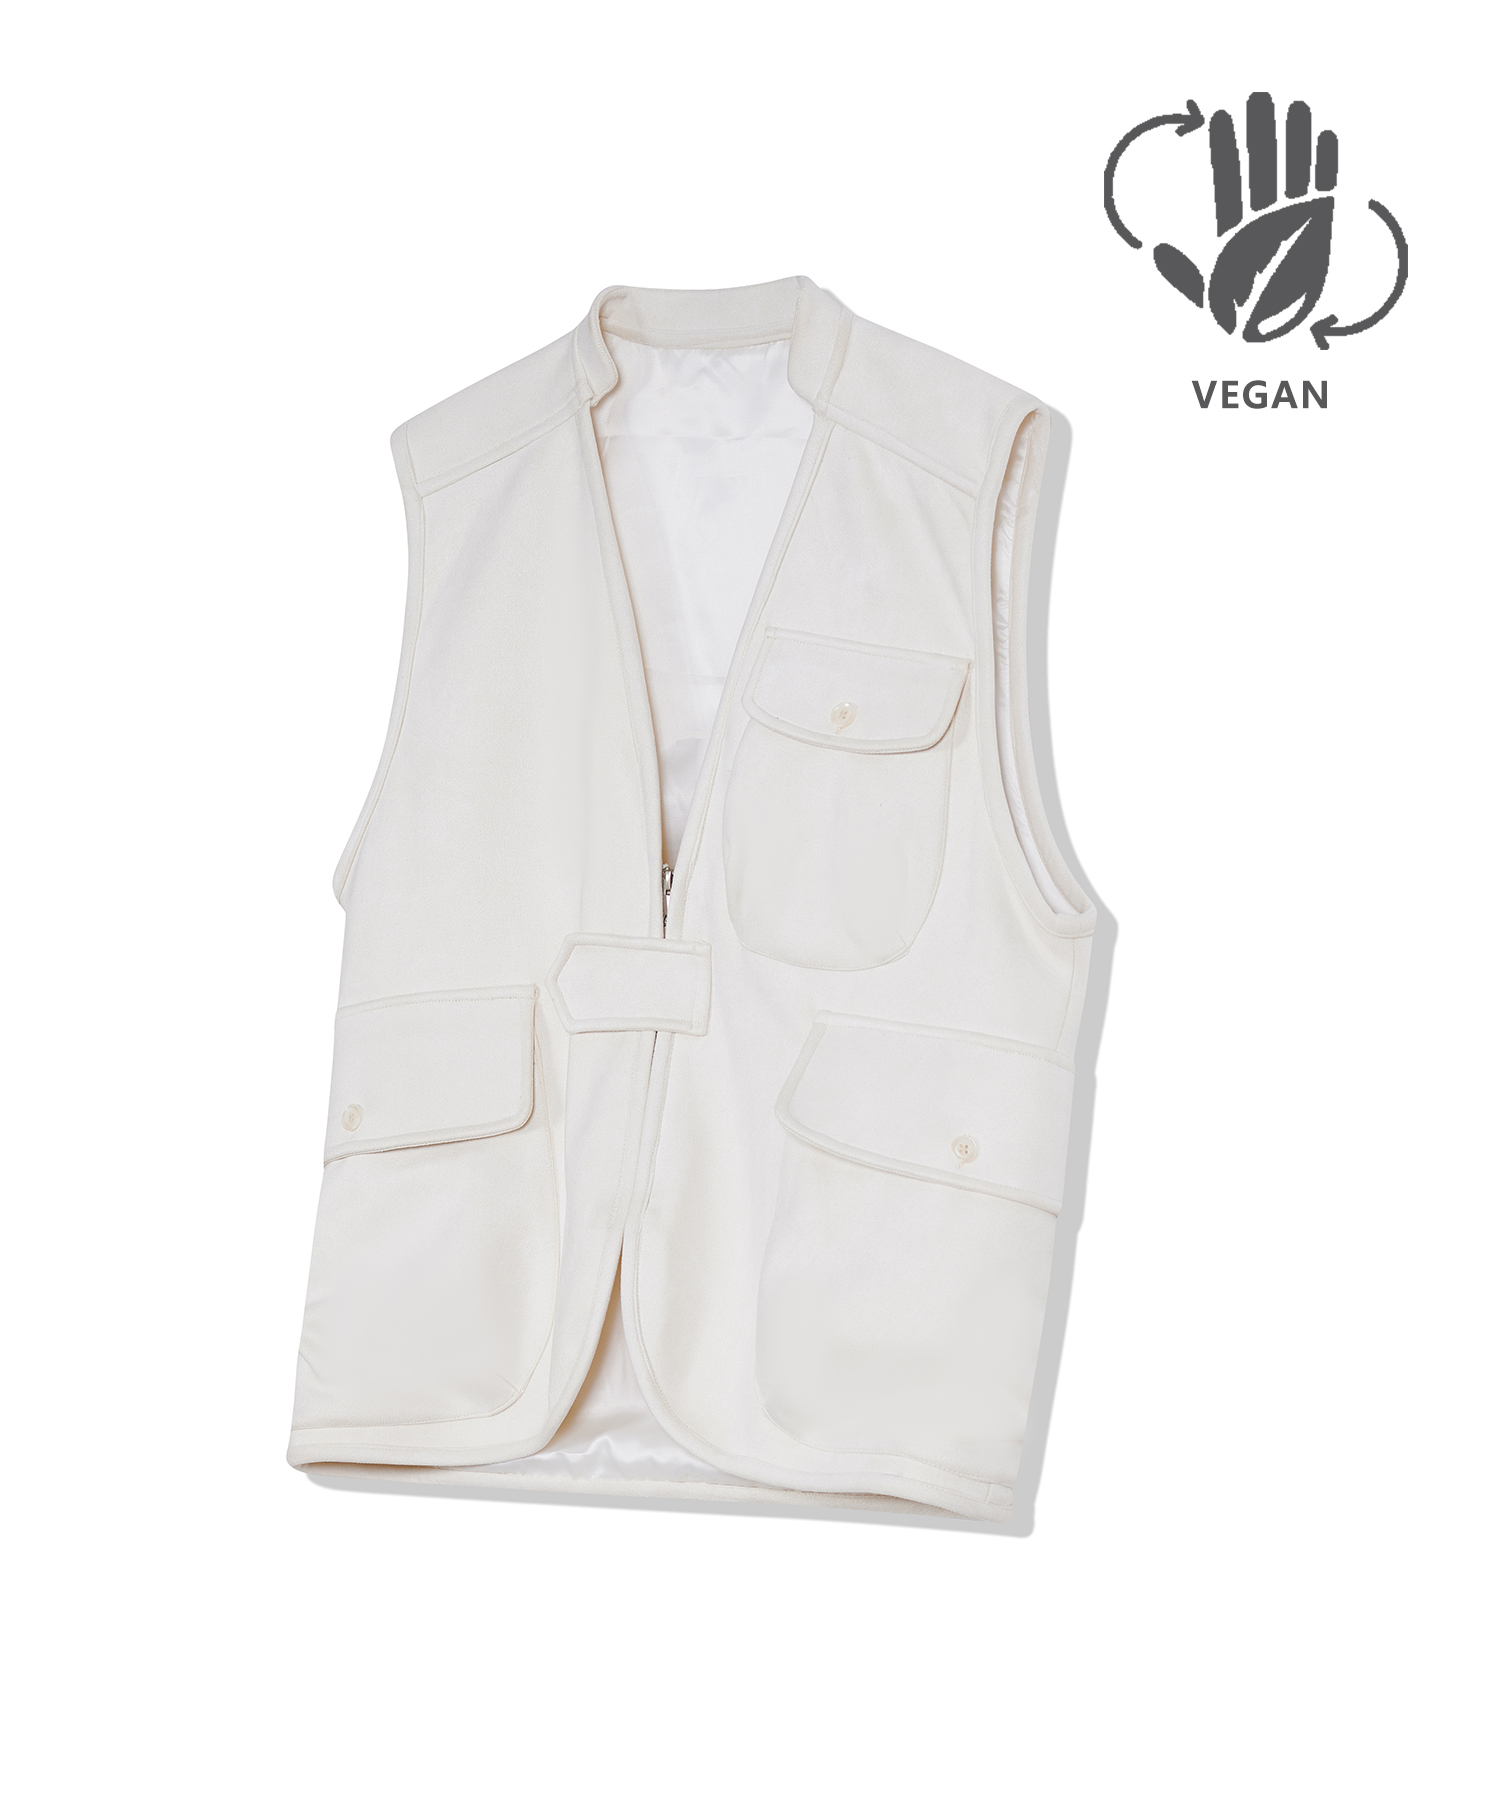 87-STAN025 [Vegan Suede] Multi Pocket Suede Vest Ivory